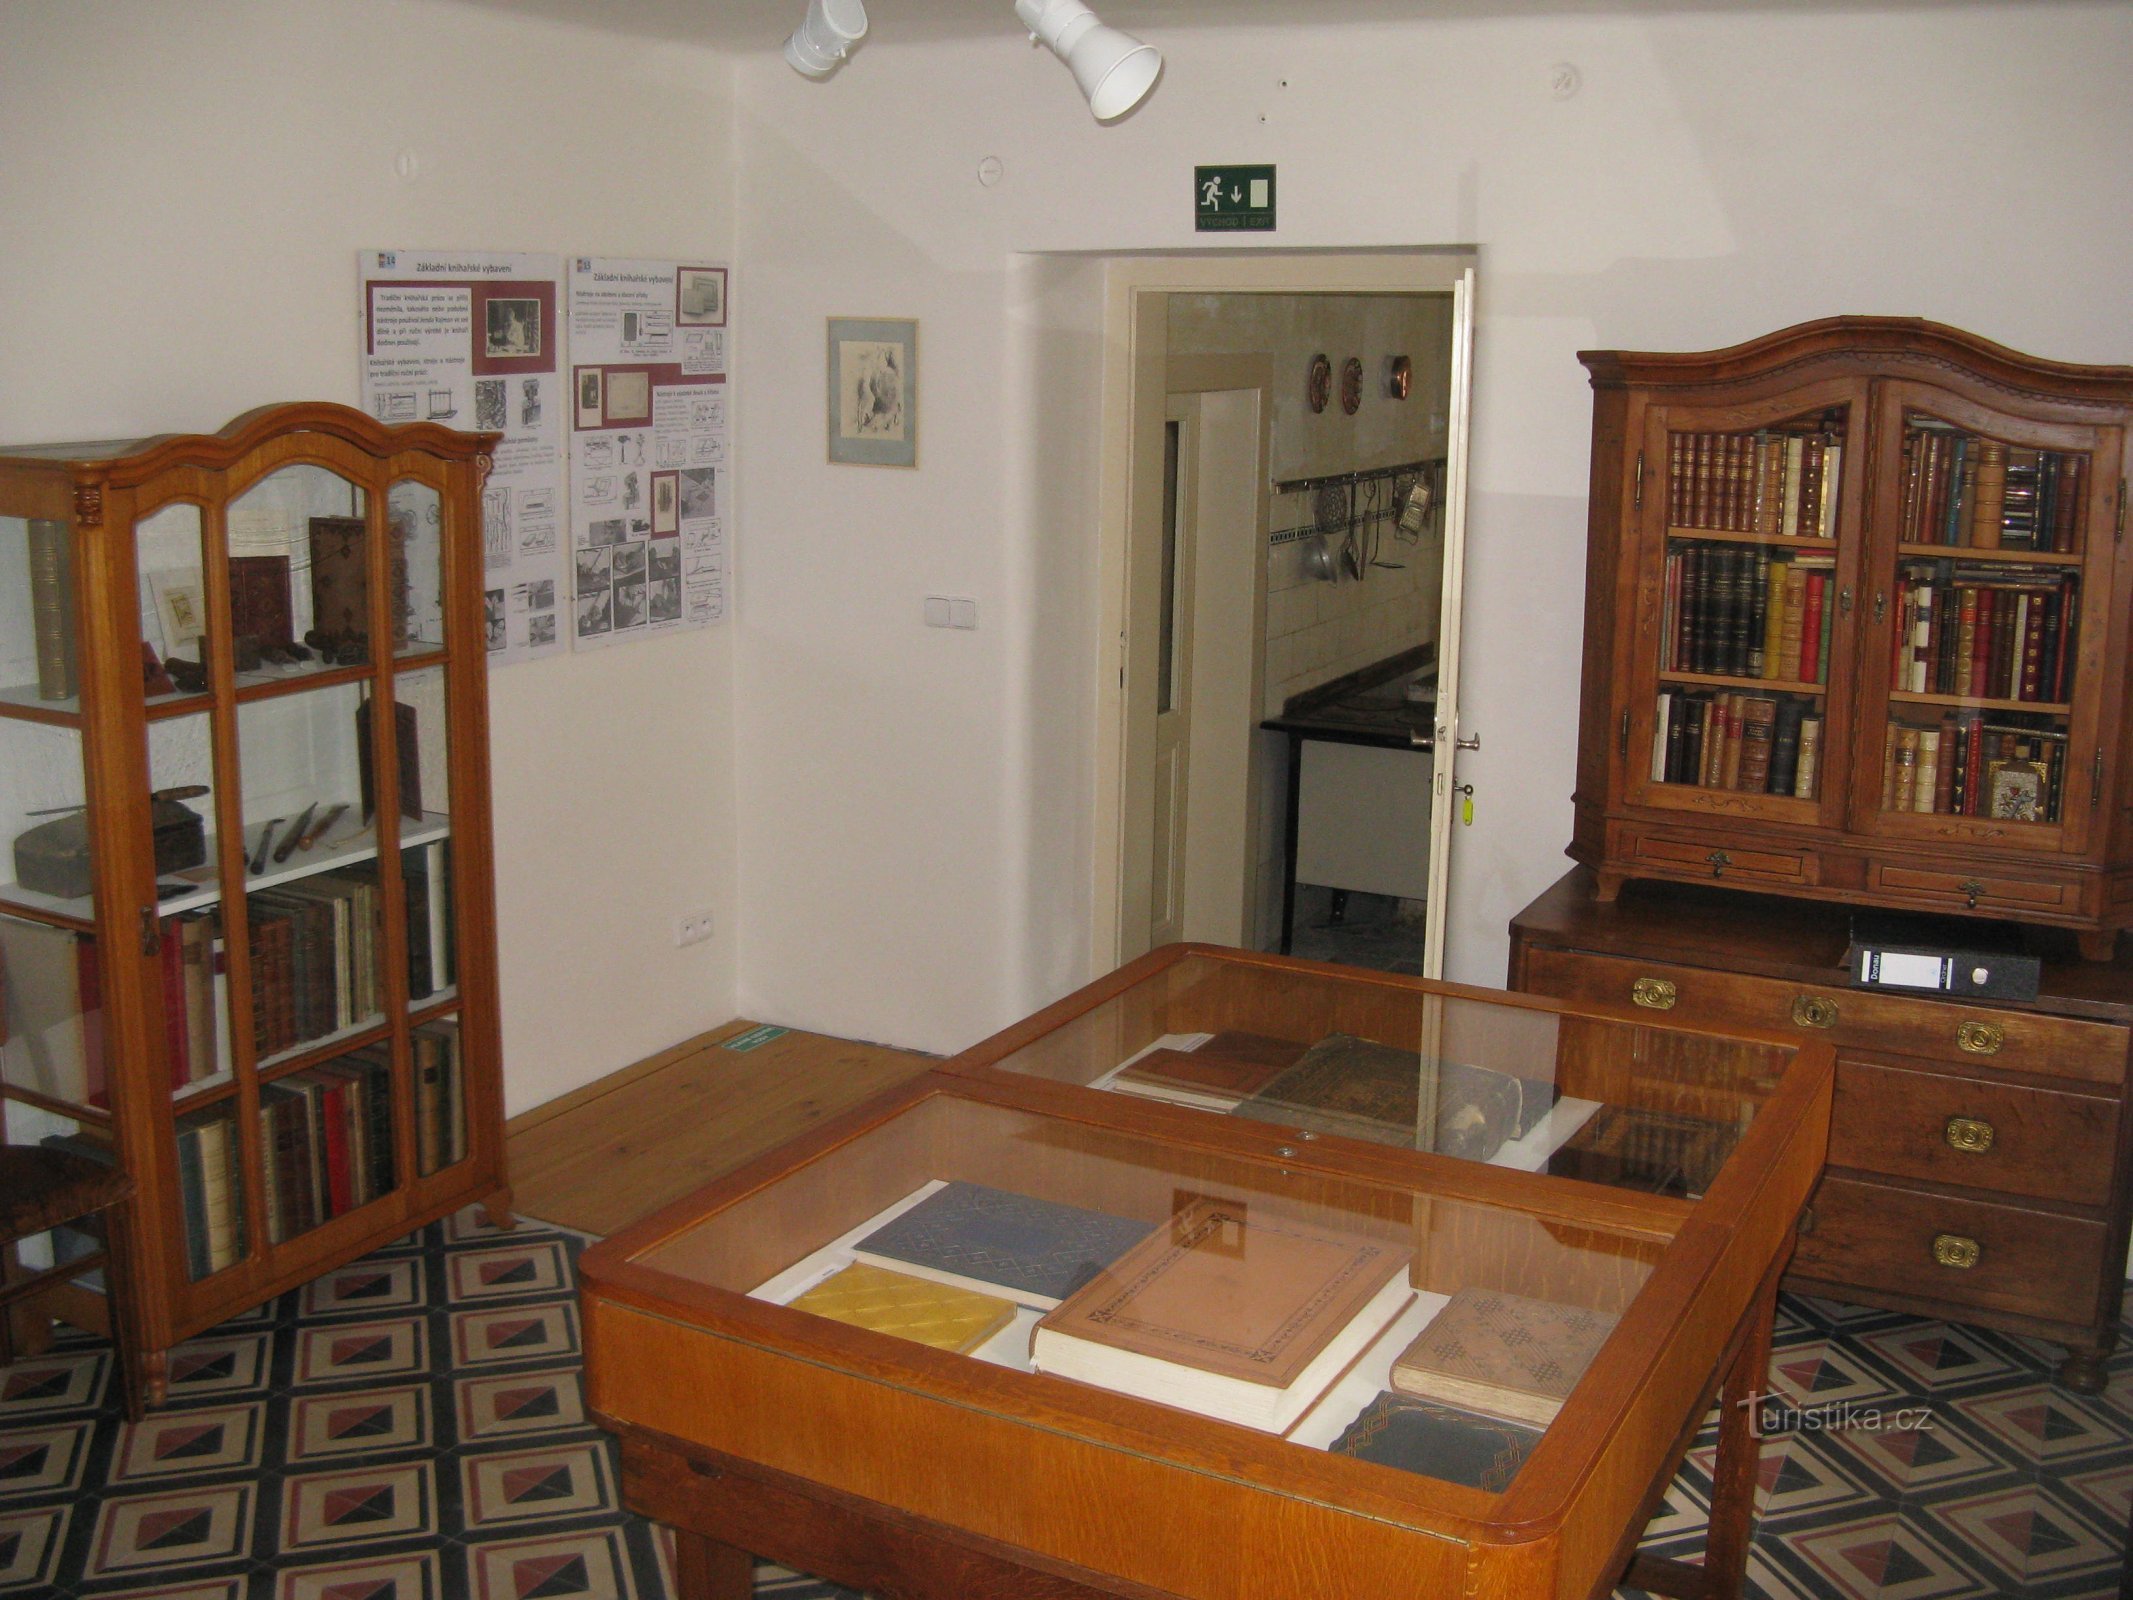 Klasszikus bukmékerek múzeuma Rožďalovicében